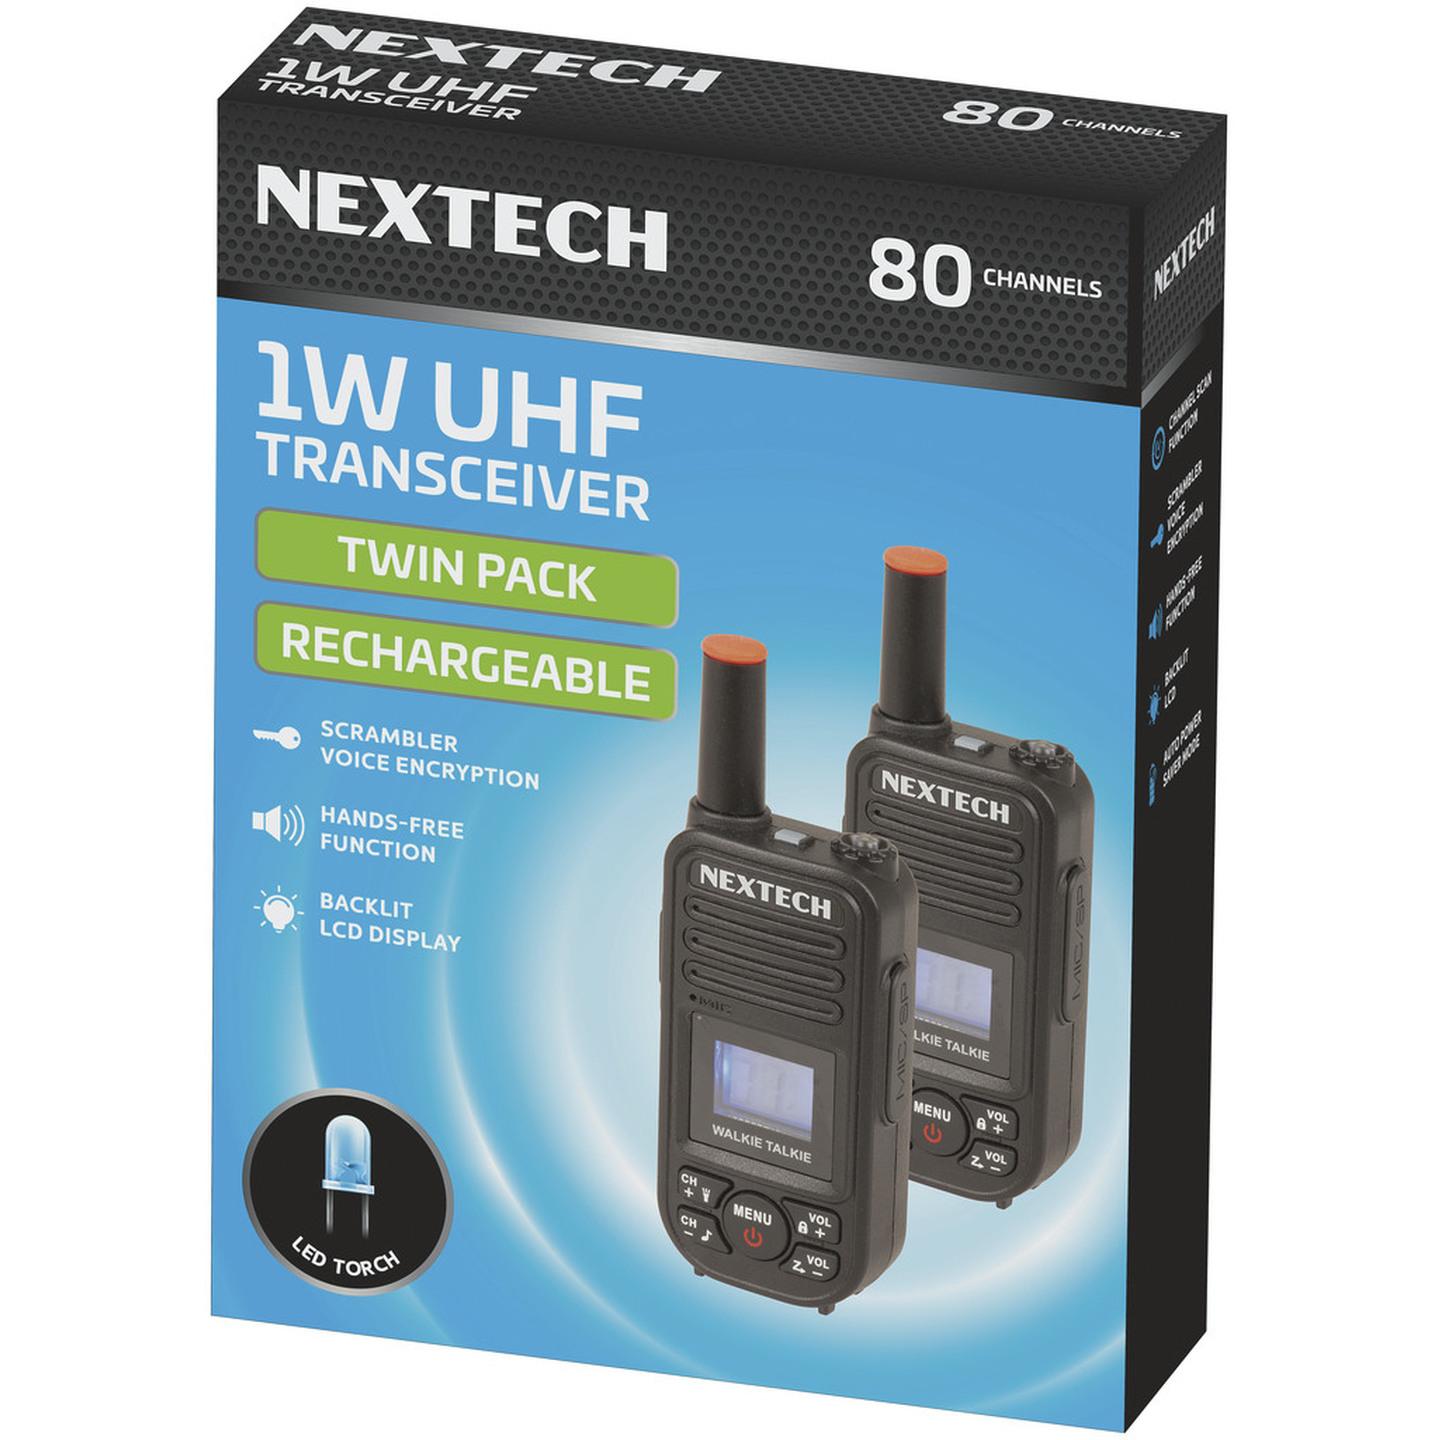 NEXTECH 1W UHF Transceiver Twin Pack